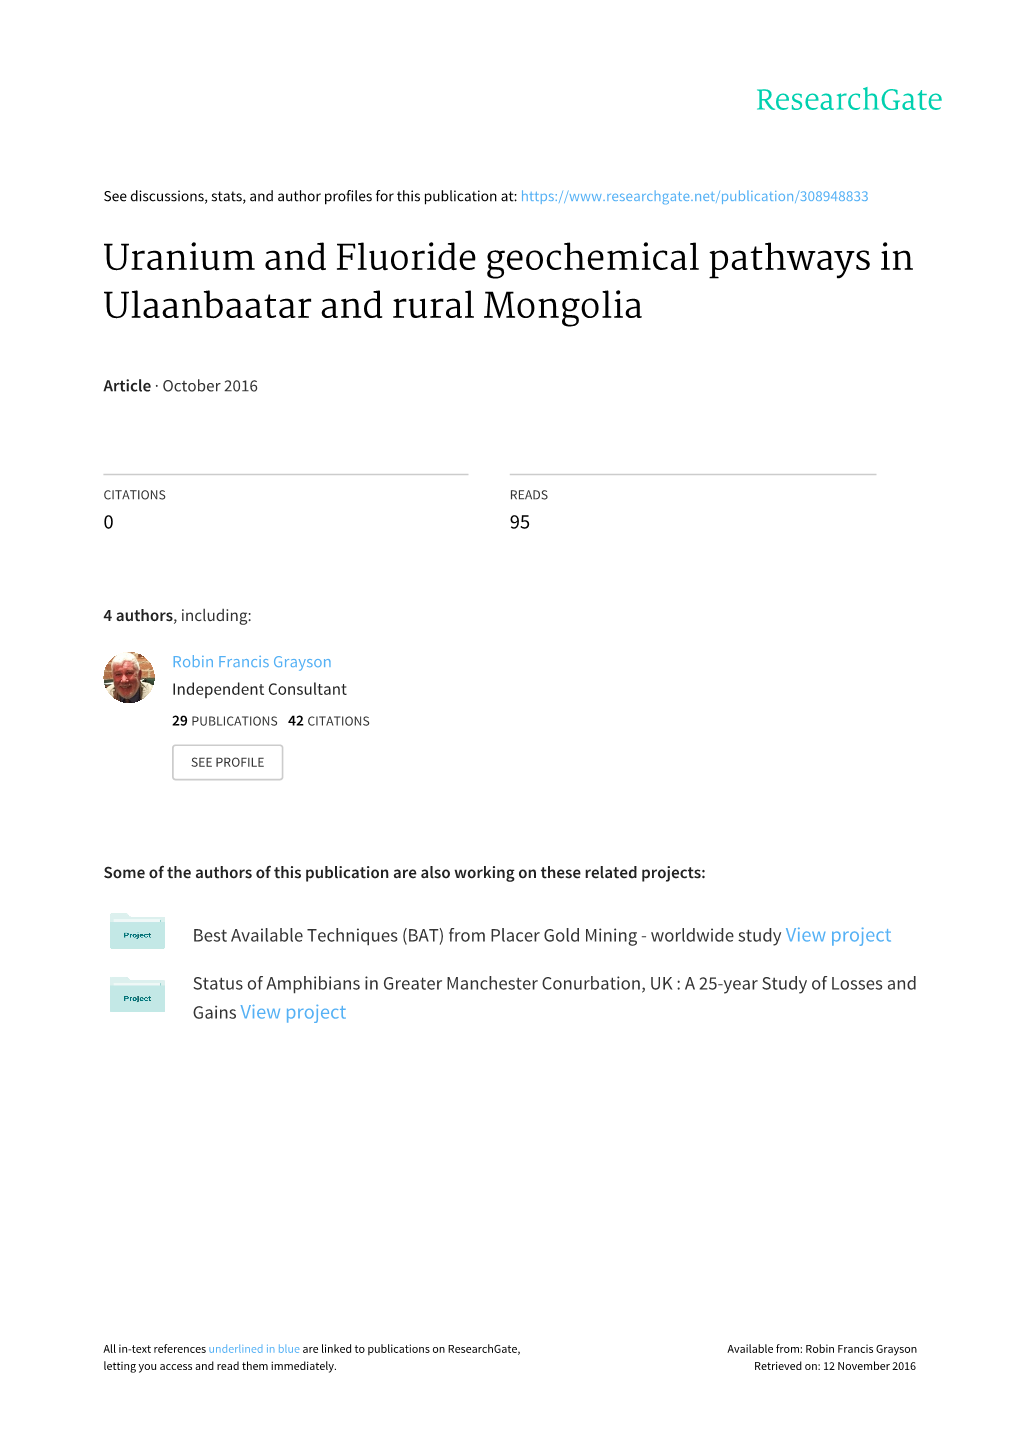 Uranium and Fluoride Geochemical Pathways in Ulaanbaatar and Rural Mongolia